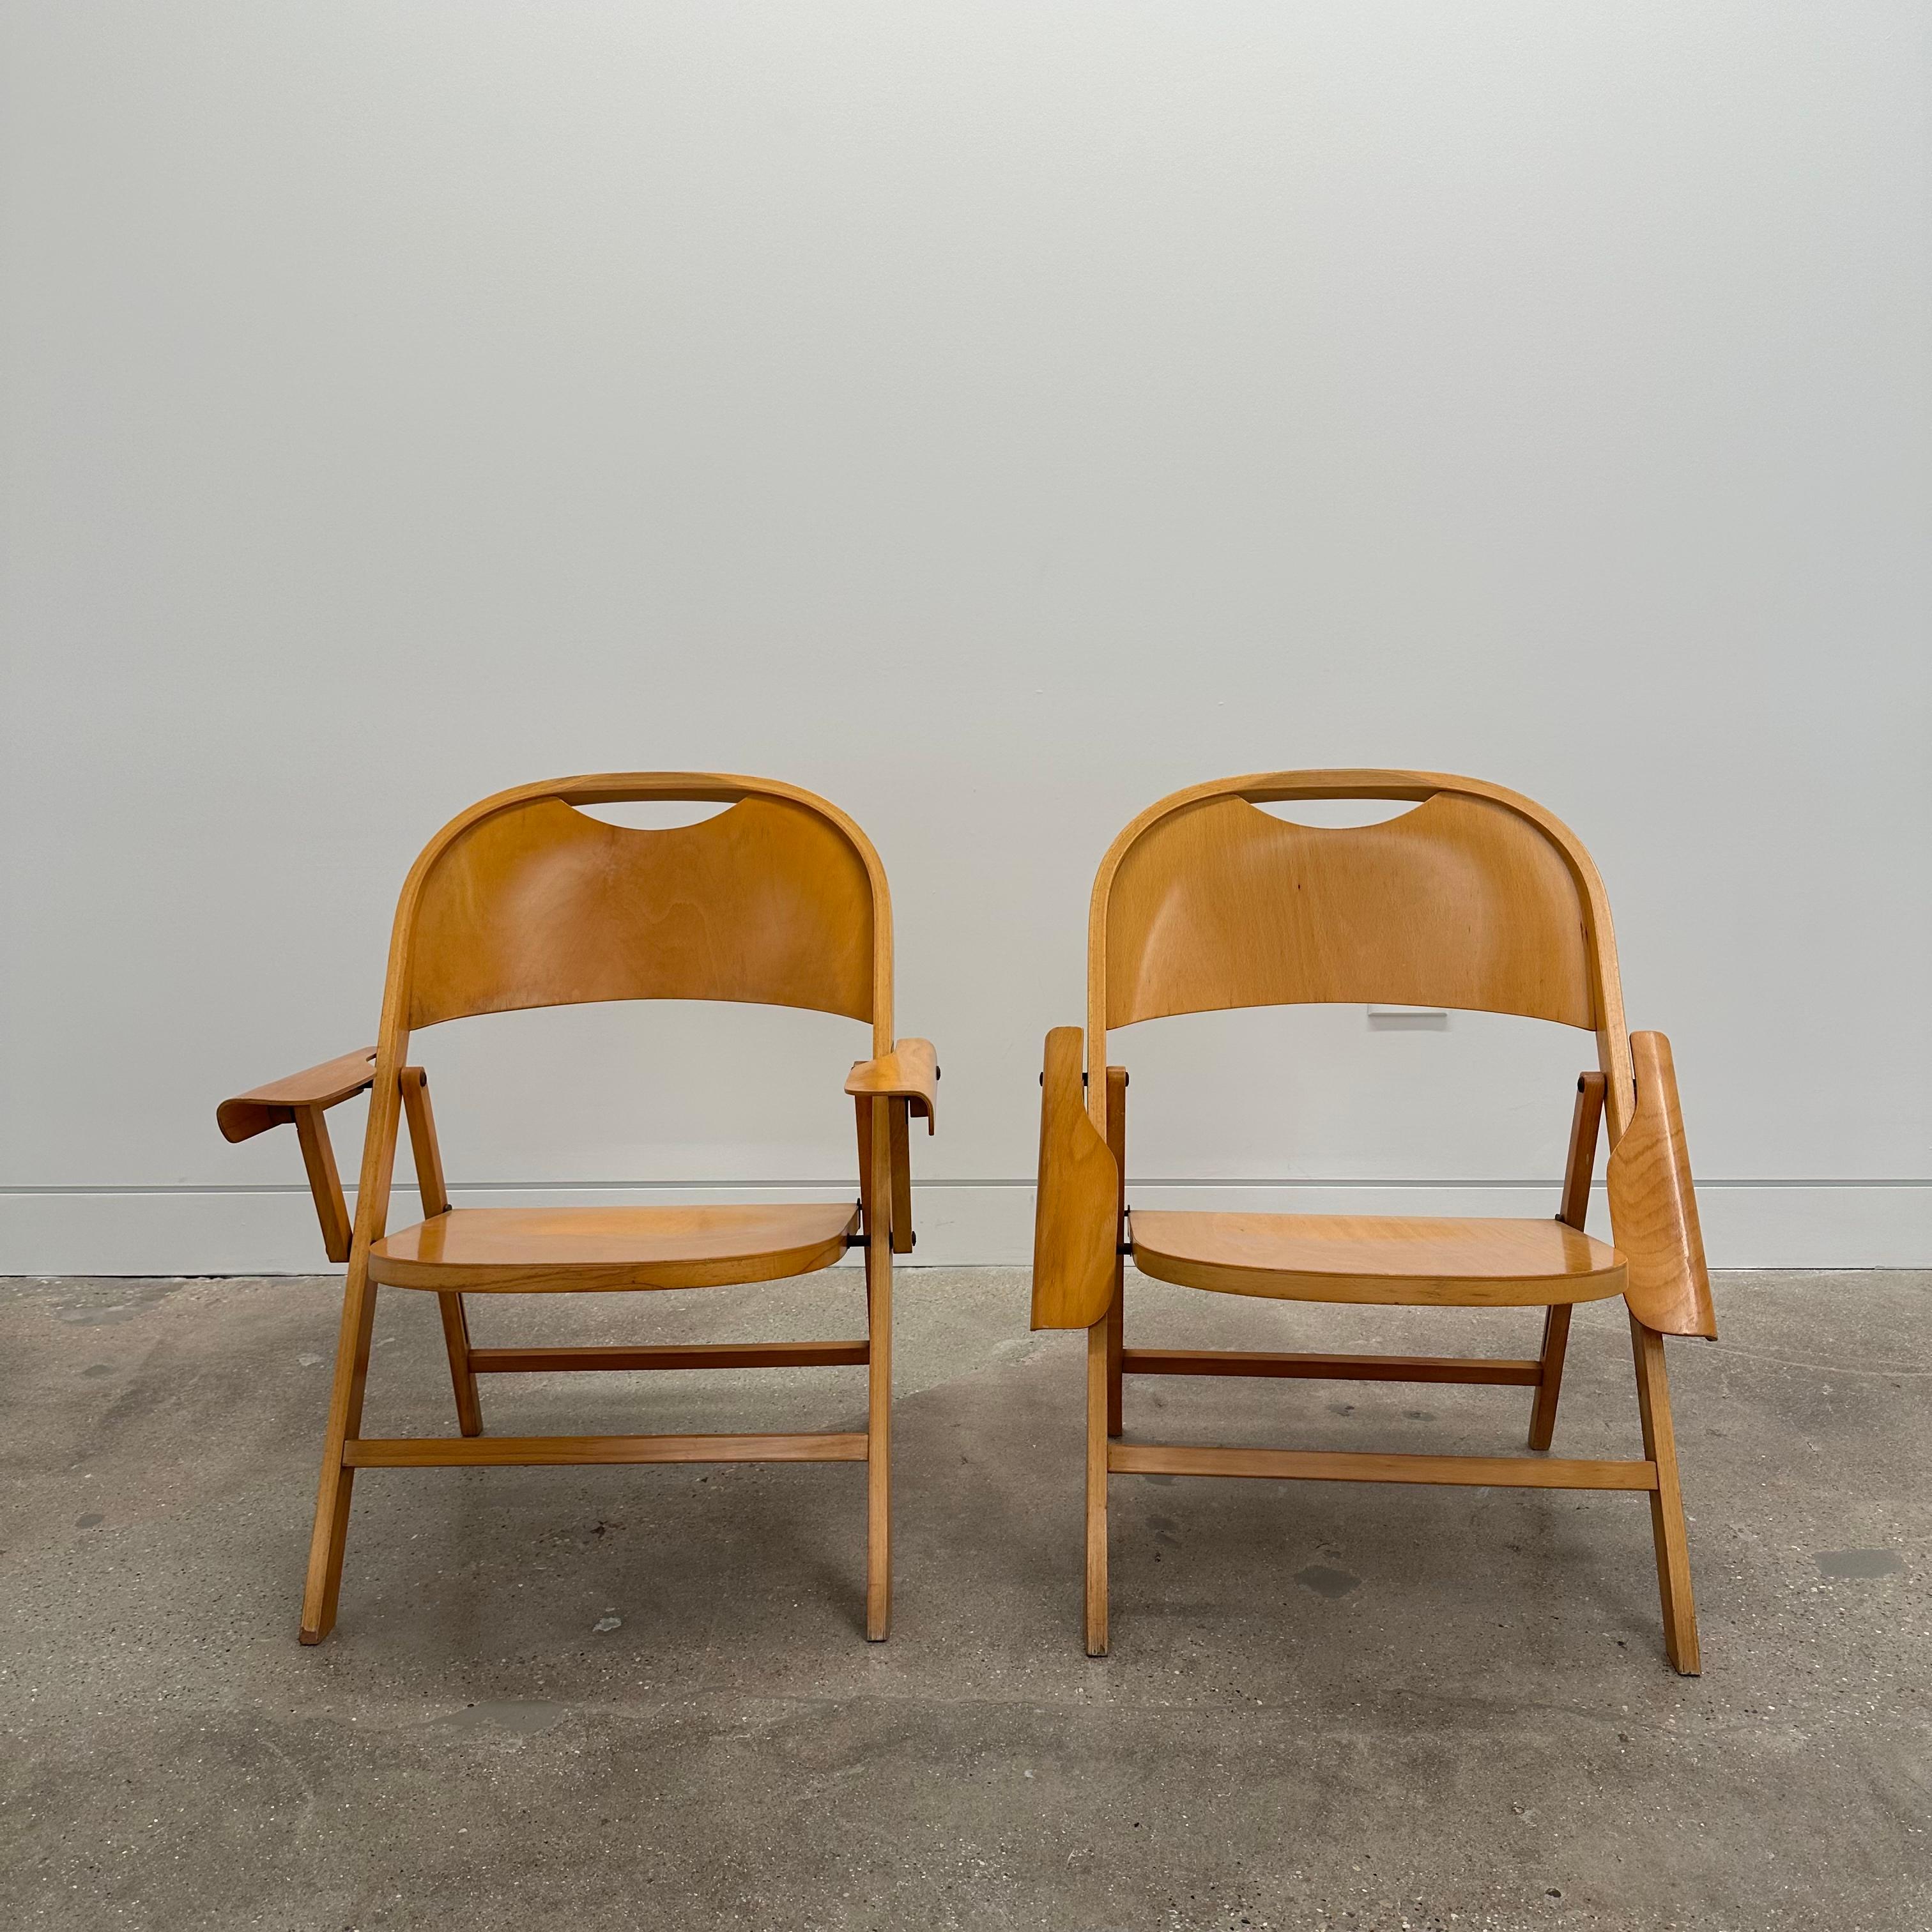 Achille Castiglioni “Ginevra” Folding Armchairs for Bbb Bonachina, Italy 1979 In Good Condition For Sale In Skokie, IL